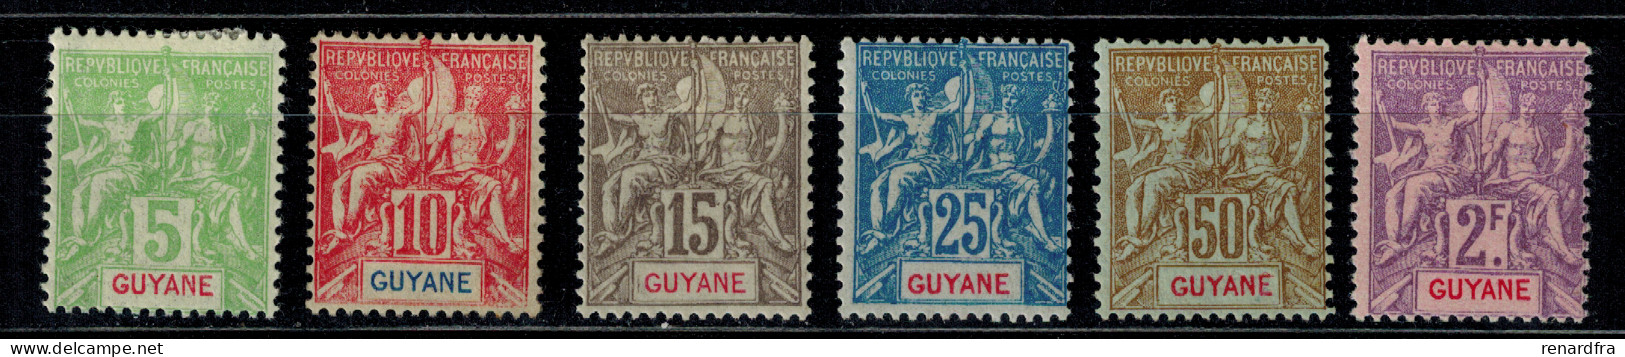 Timbres De Guyane N° 43, 44, 45, 46, 47, 48 Neuf * / MH - Ongebruikt